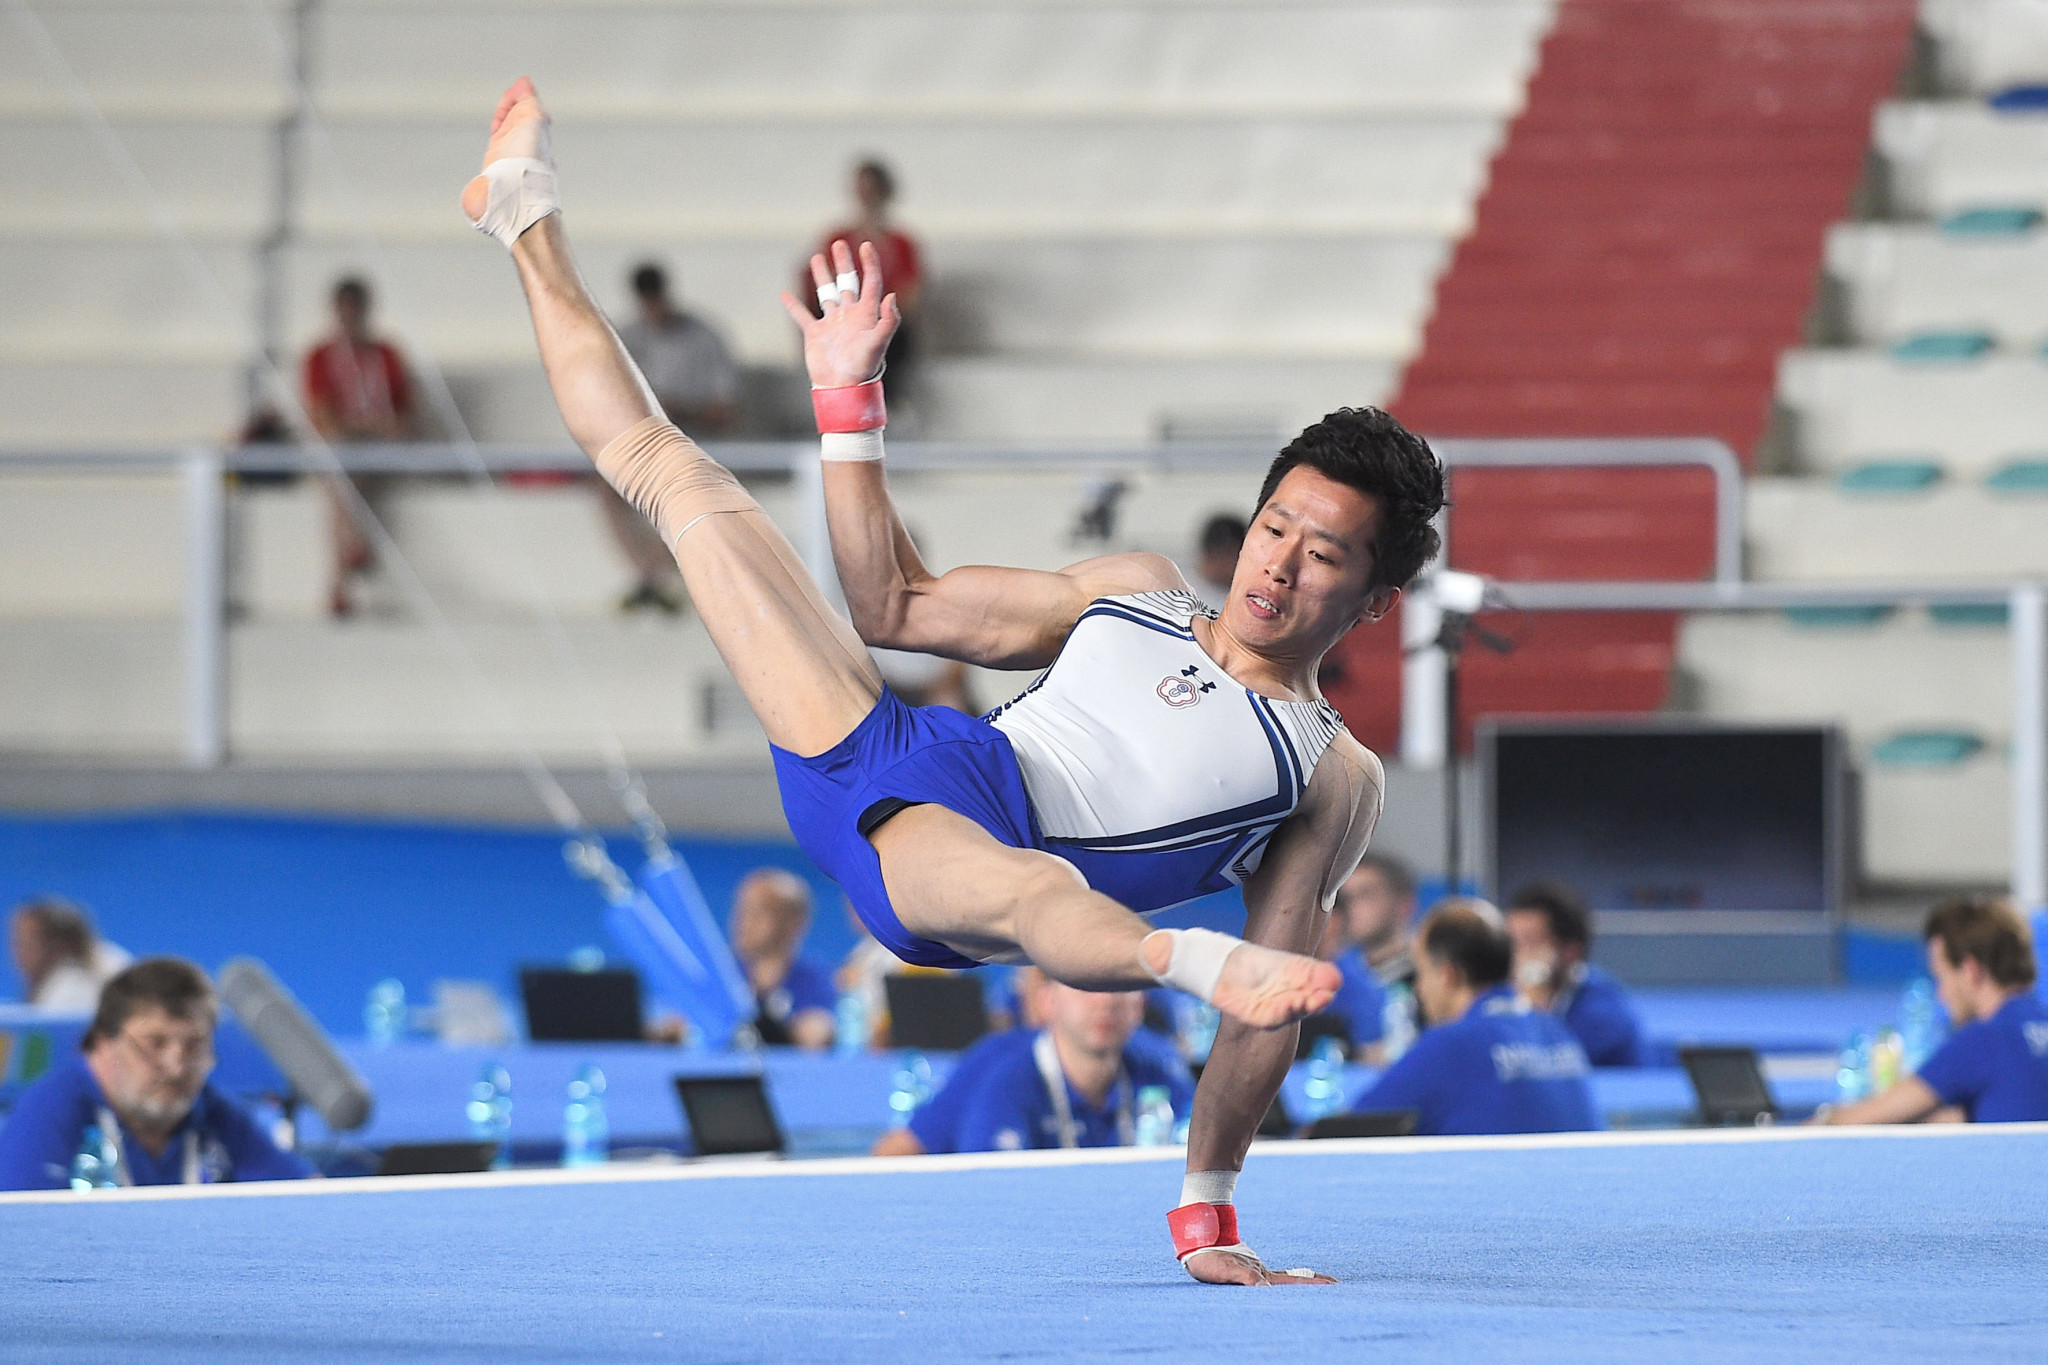 The men's artistic gymnastics final saw lots of twists and tumbles at PalaVesuvius Main Hall ©Naples 2019